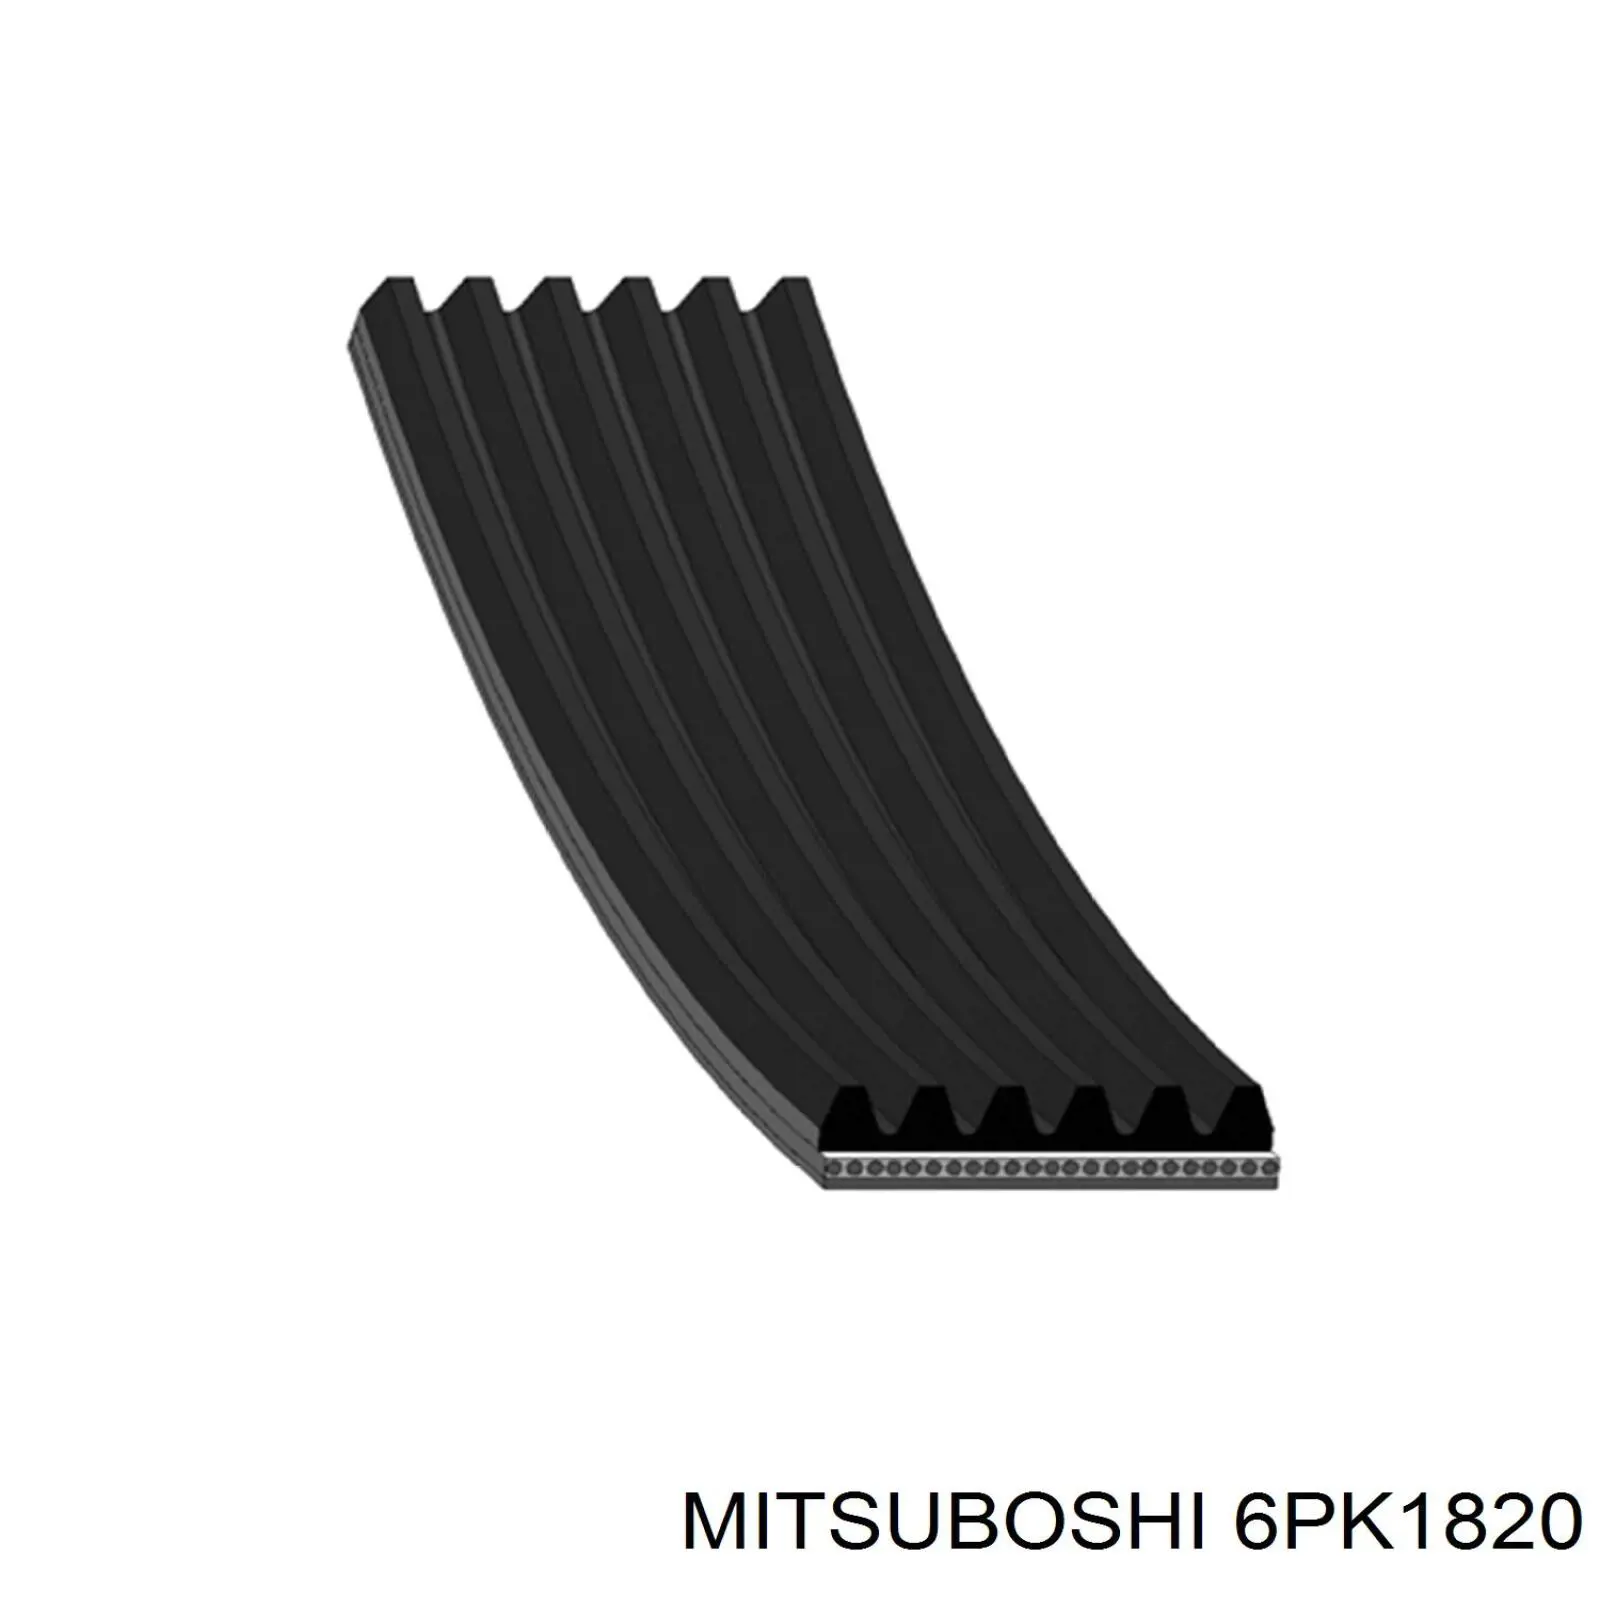 6PK1820 Mitsuboshi correa trapezoidal